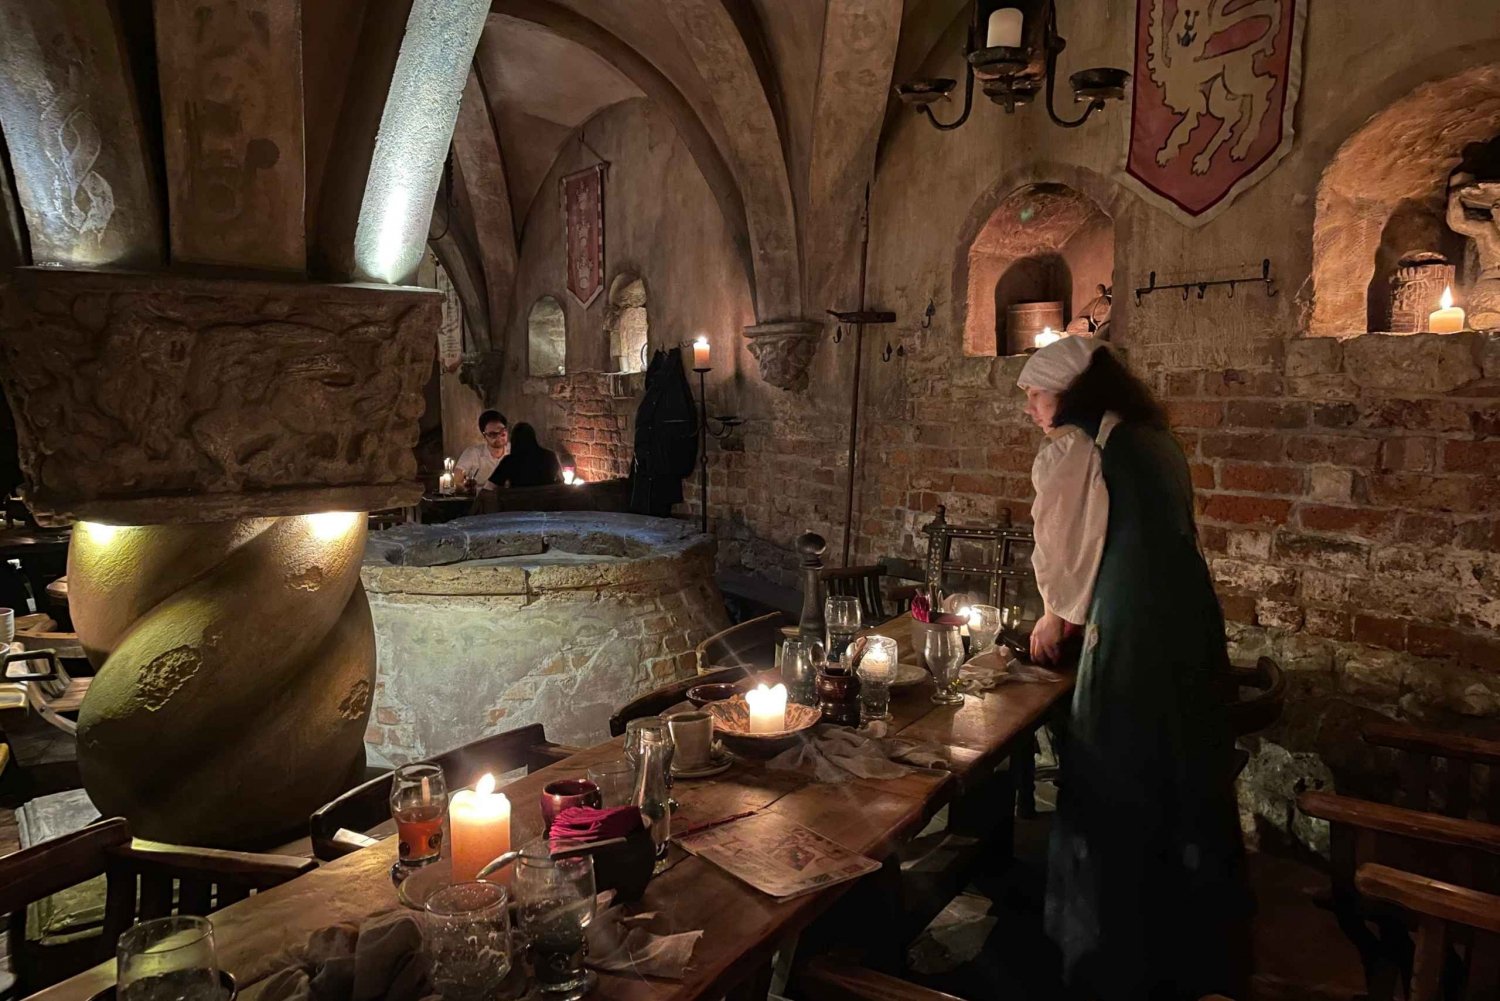 Notti Medievali: Tour del Bar e avventura guidata